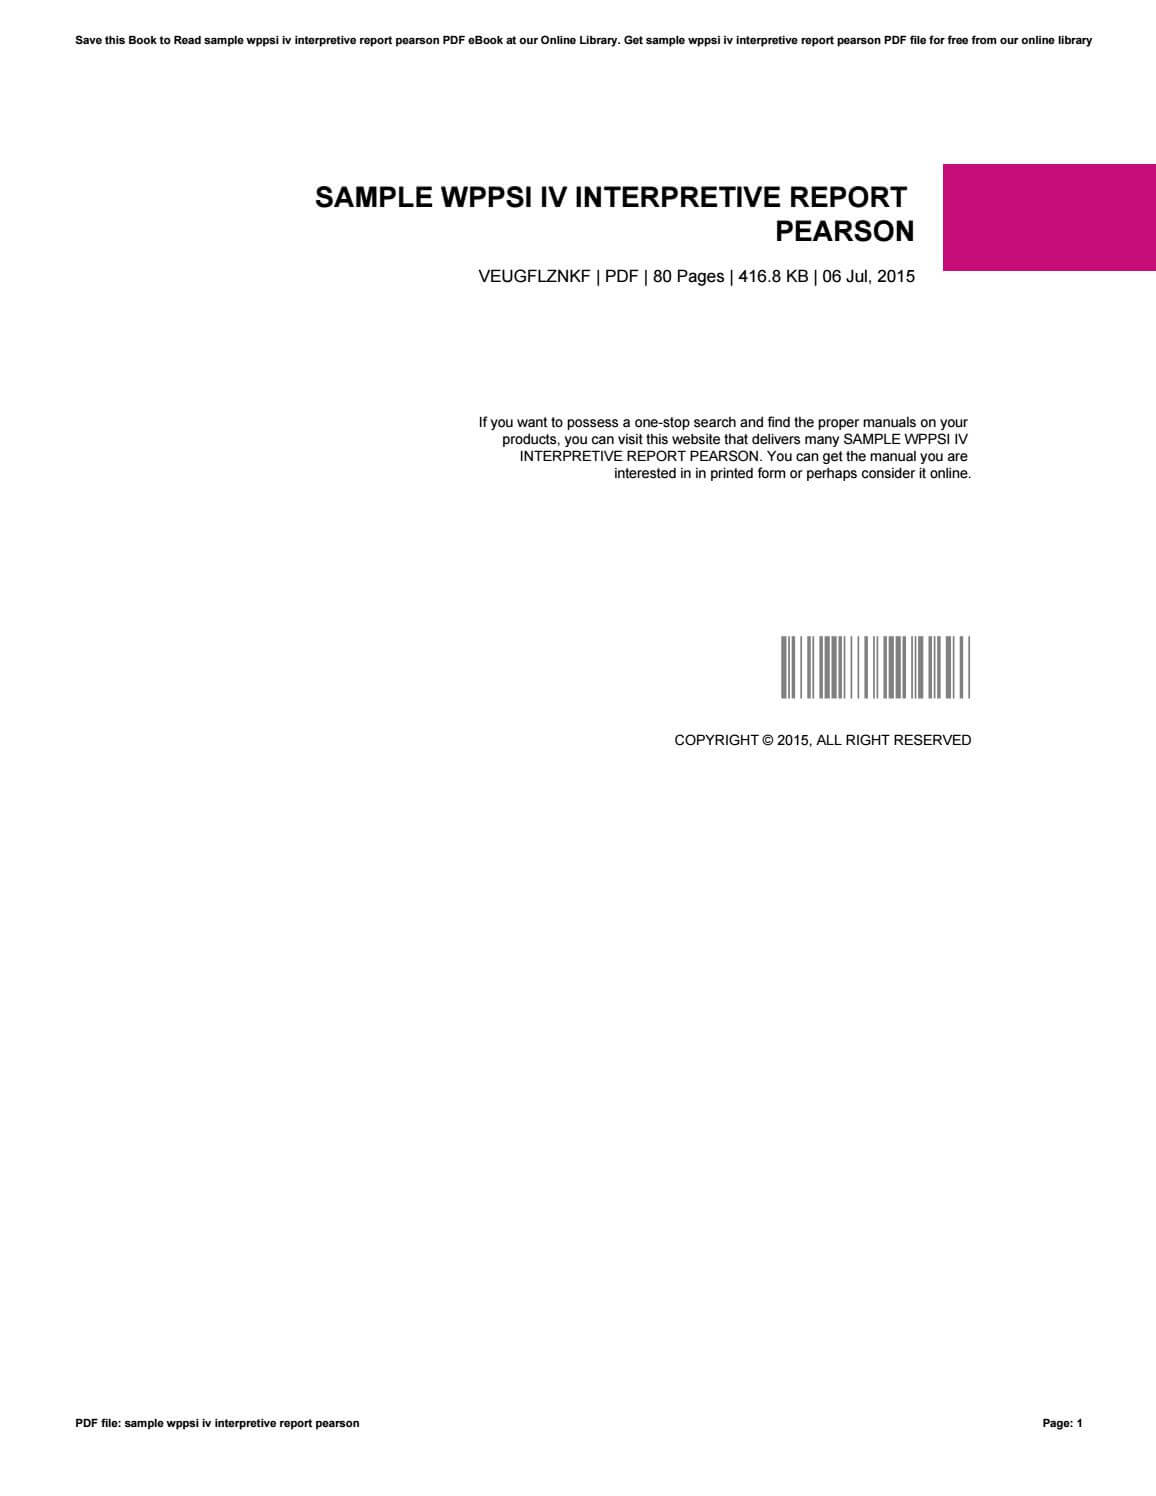 Sample Wppsi Iv Interpretive Report Pearson Regarding Wppsi Iv Report Template